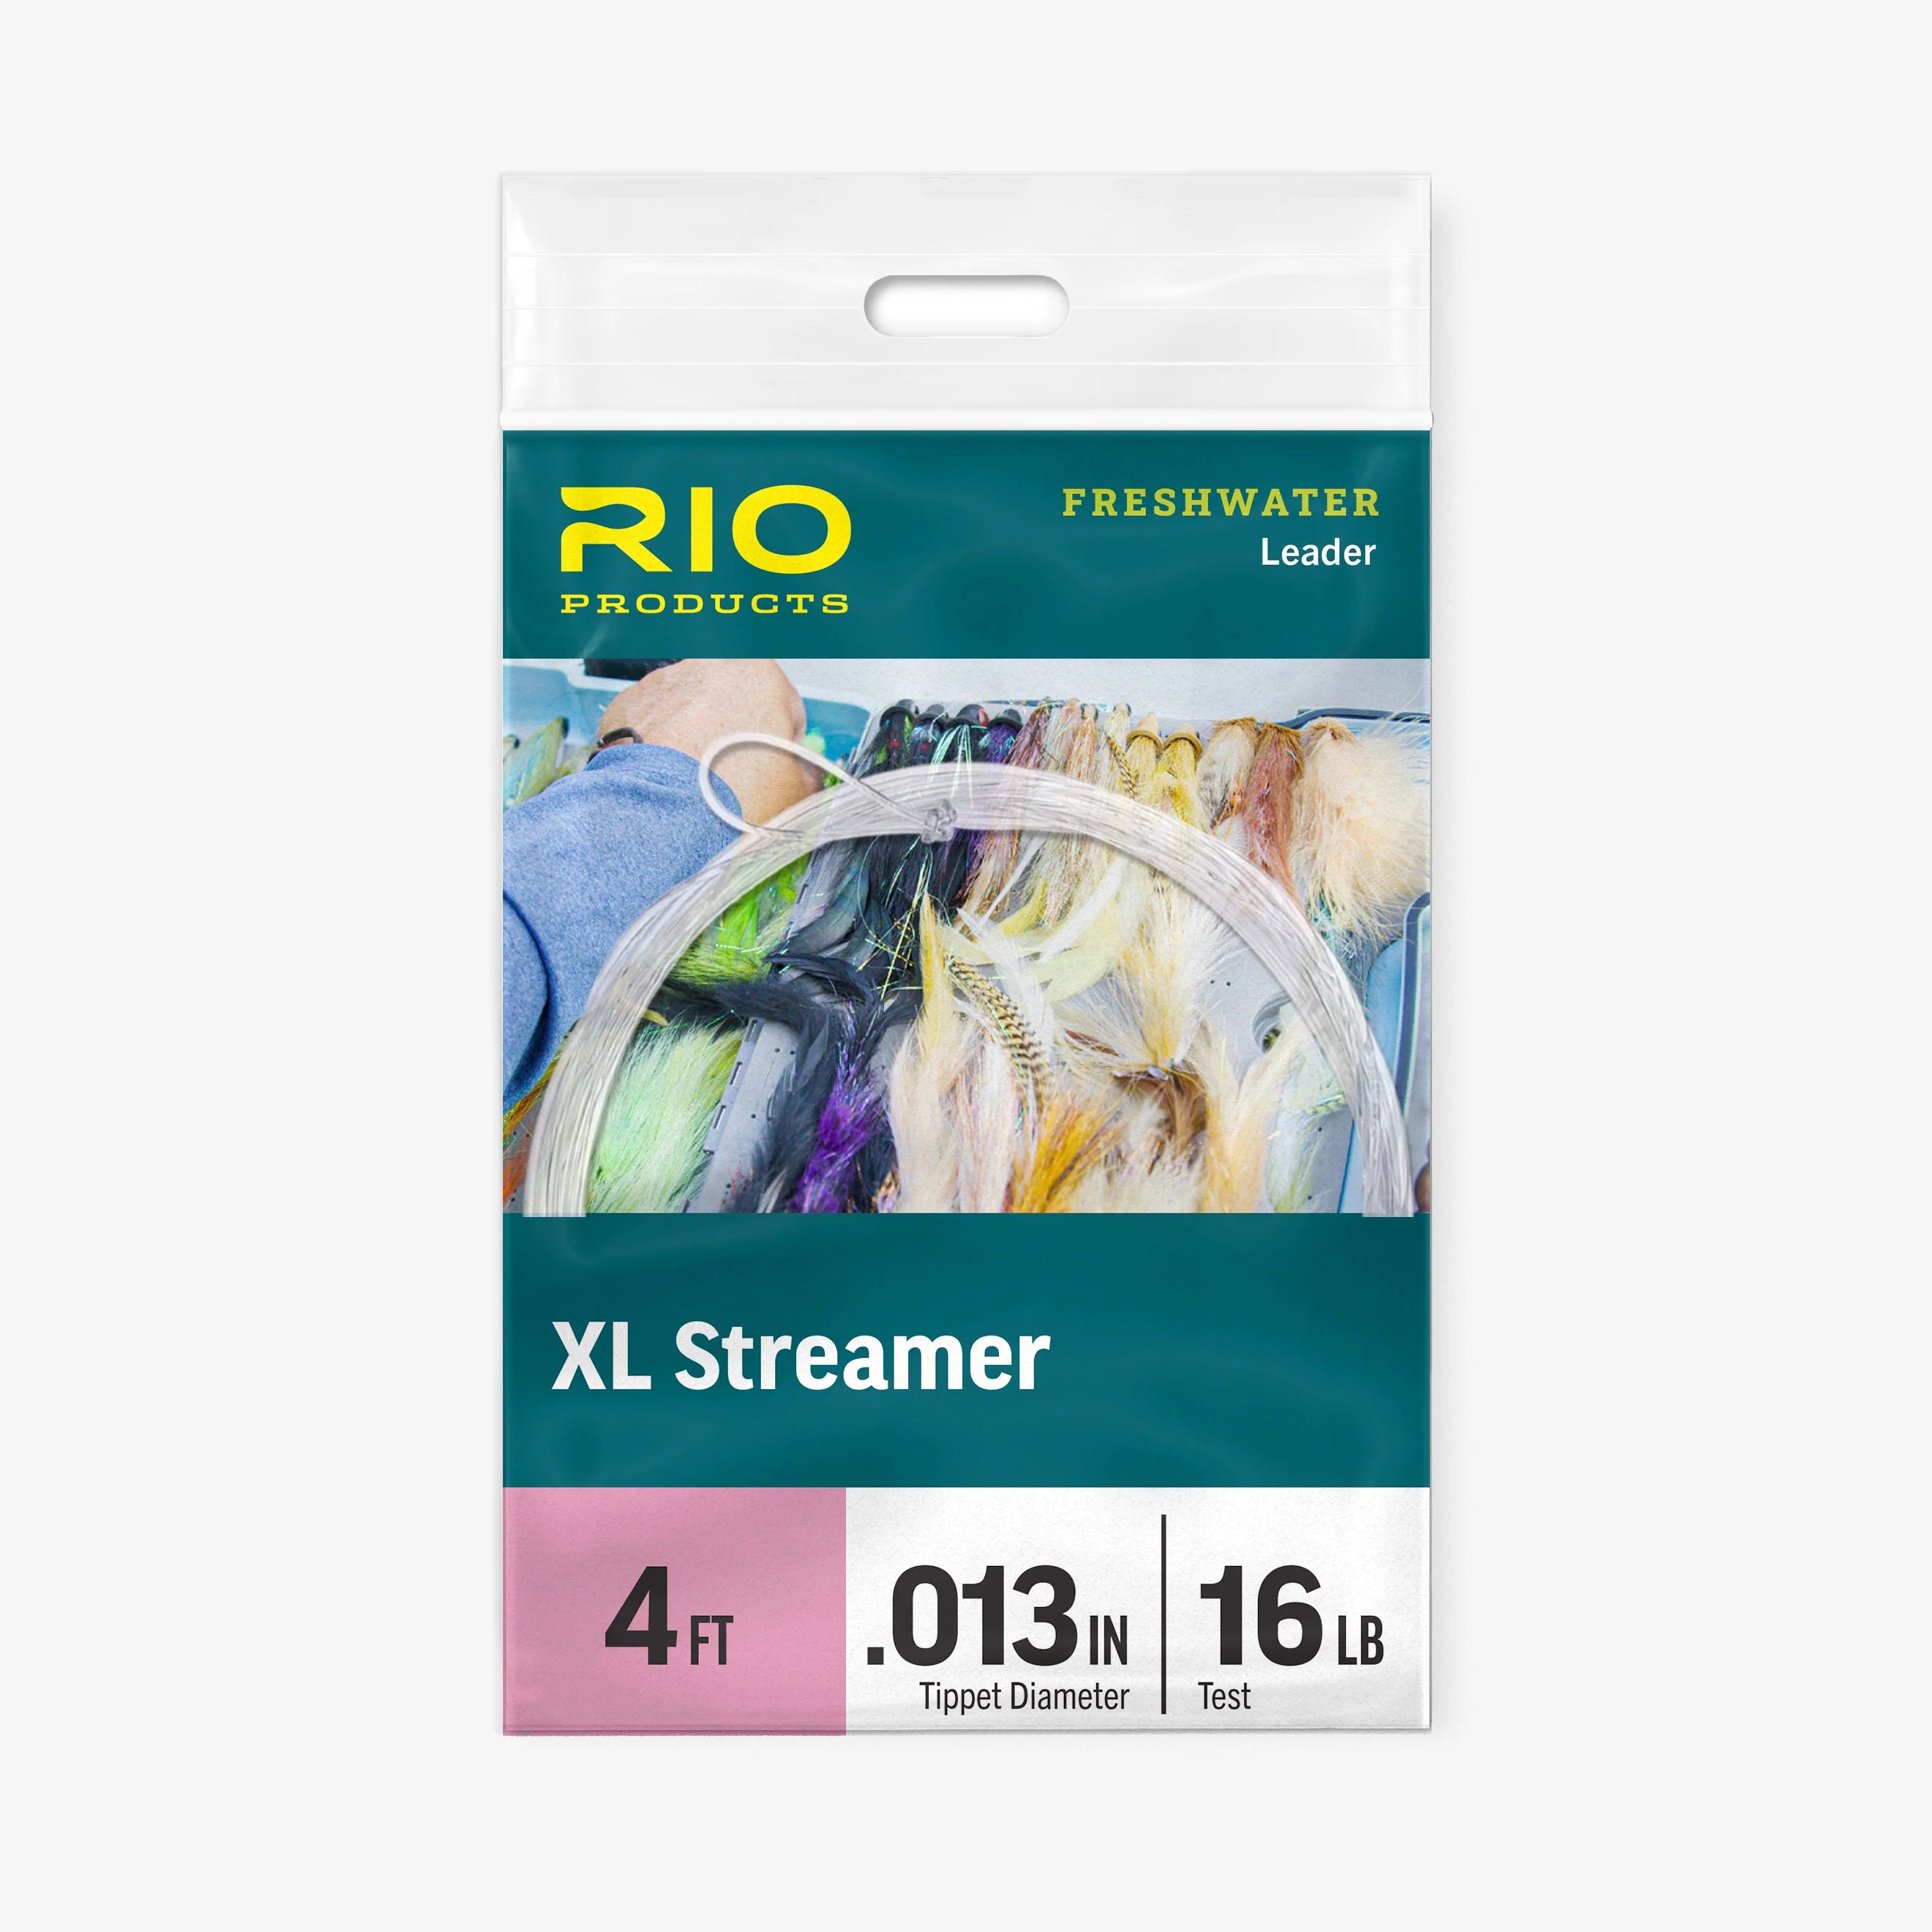 RIO XL Streamer Leader - NEW!